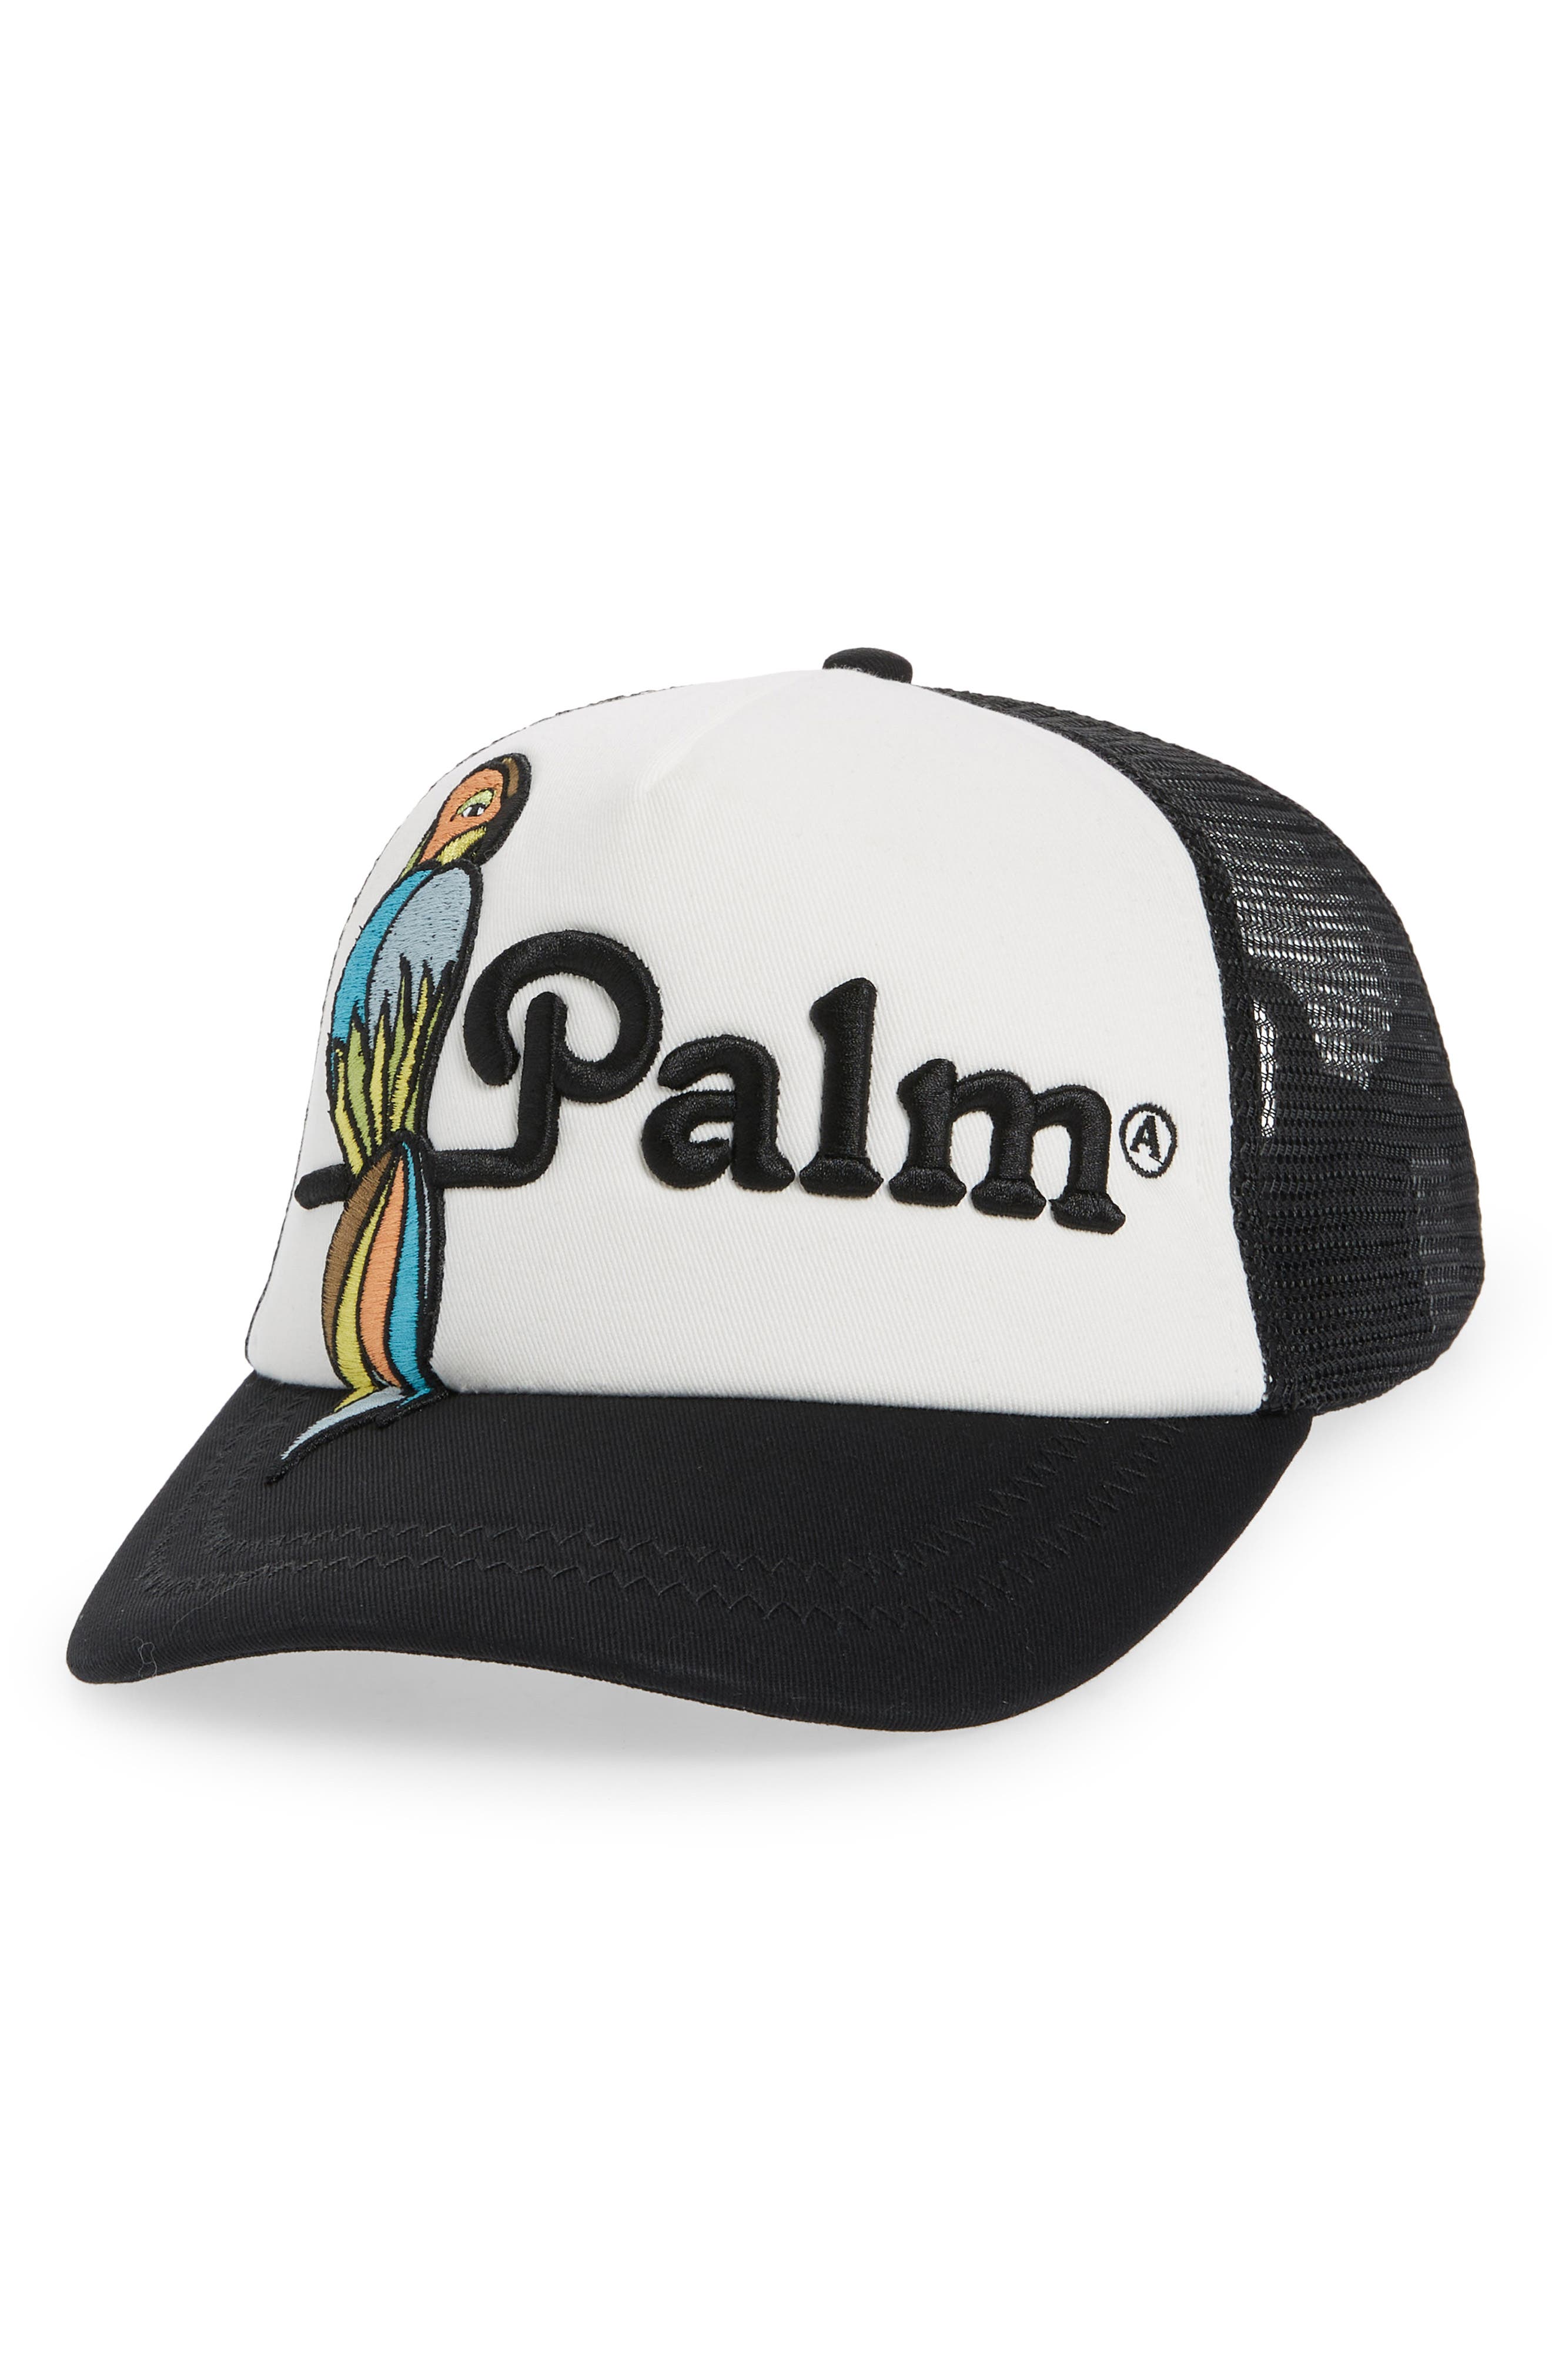 Palm Angels Men's Embroidered Parrot Trucker Hat in Black/Black